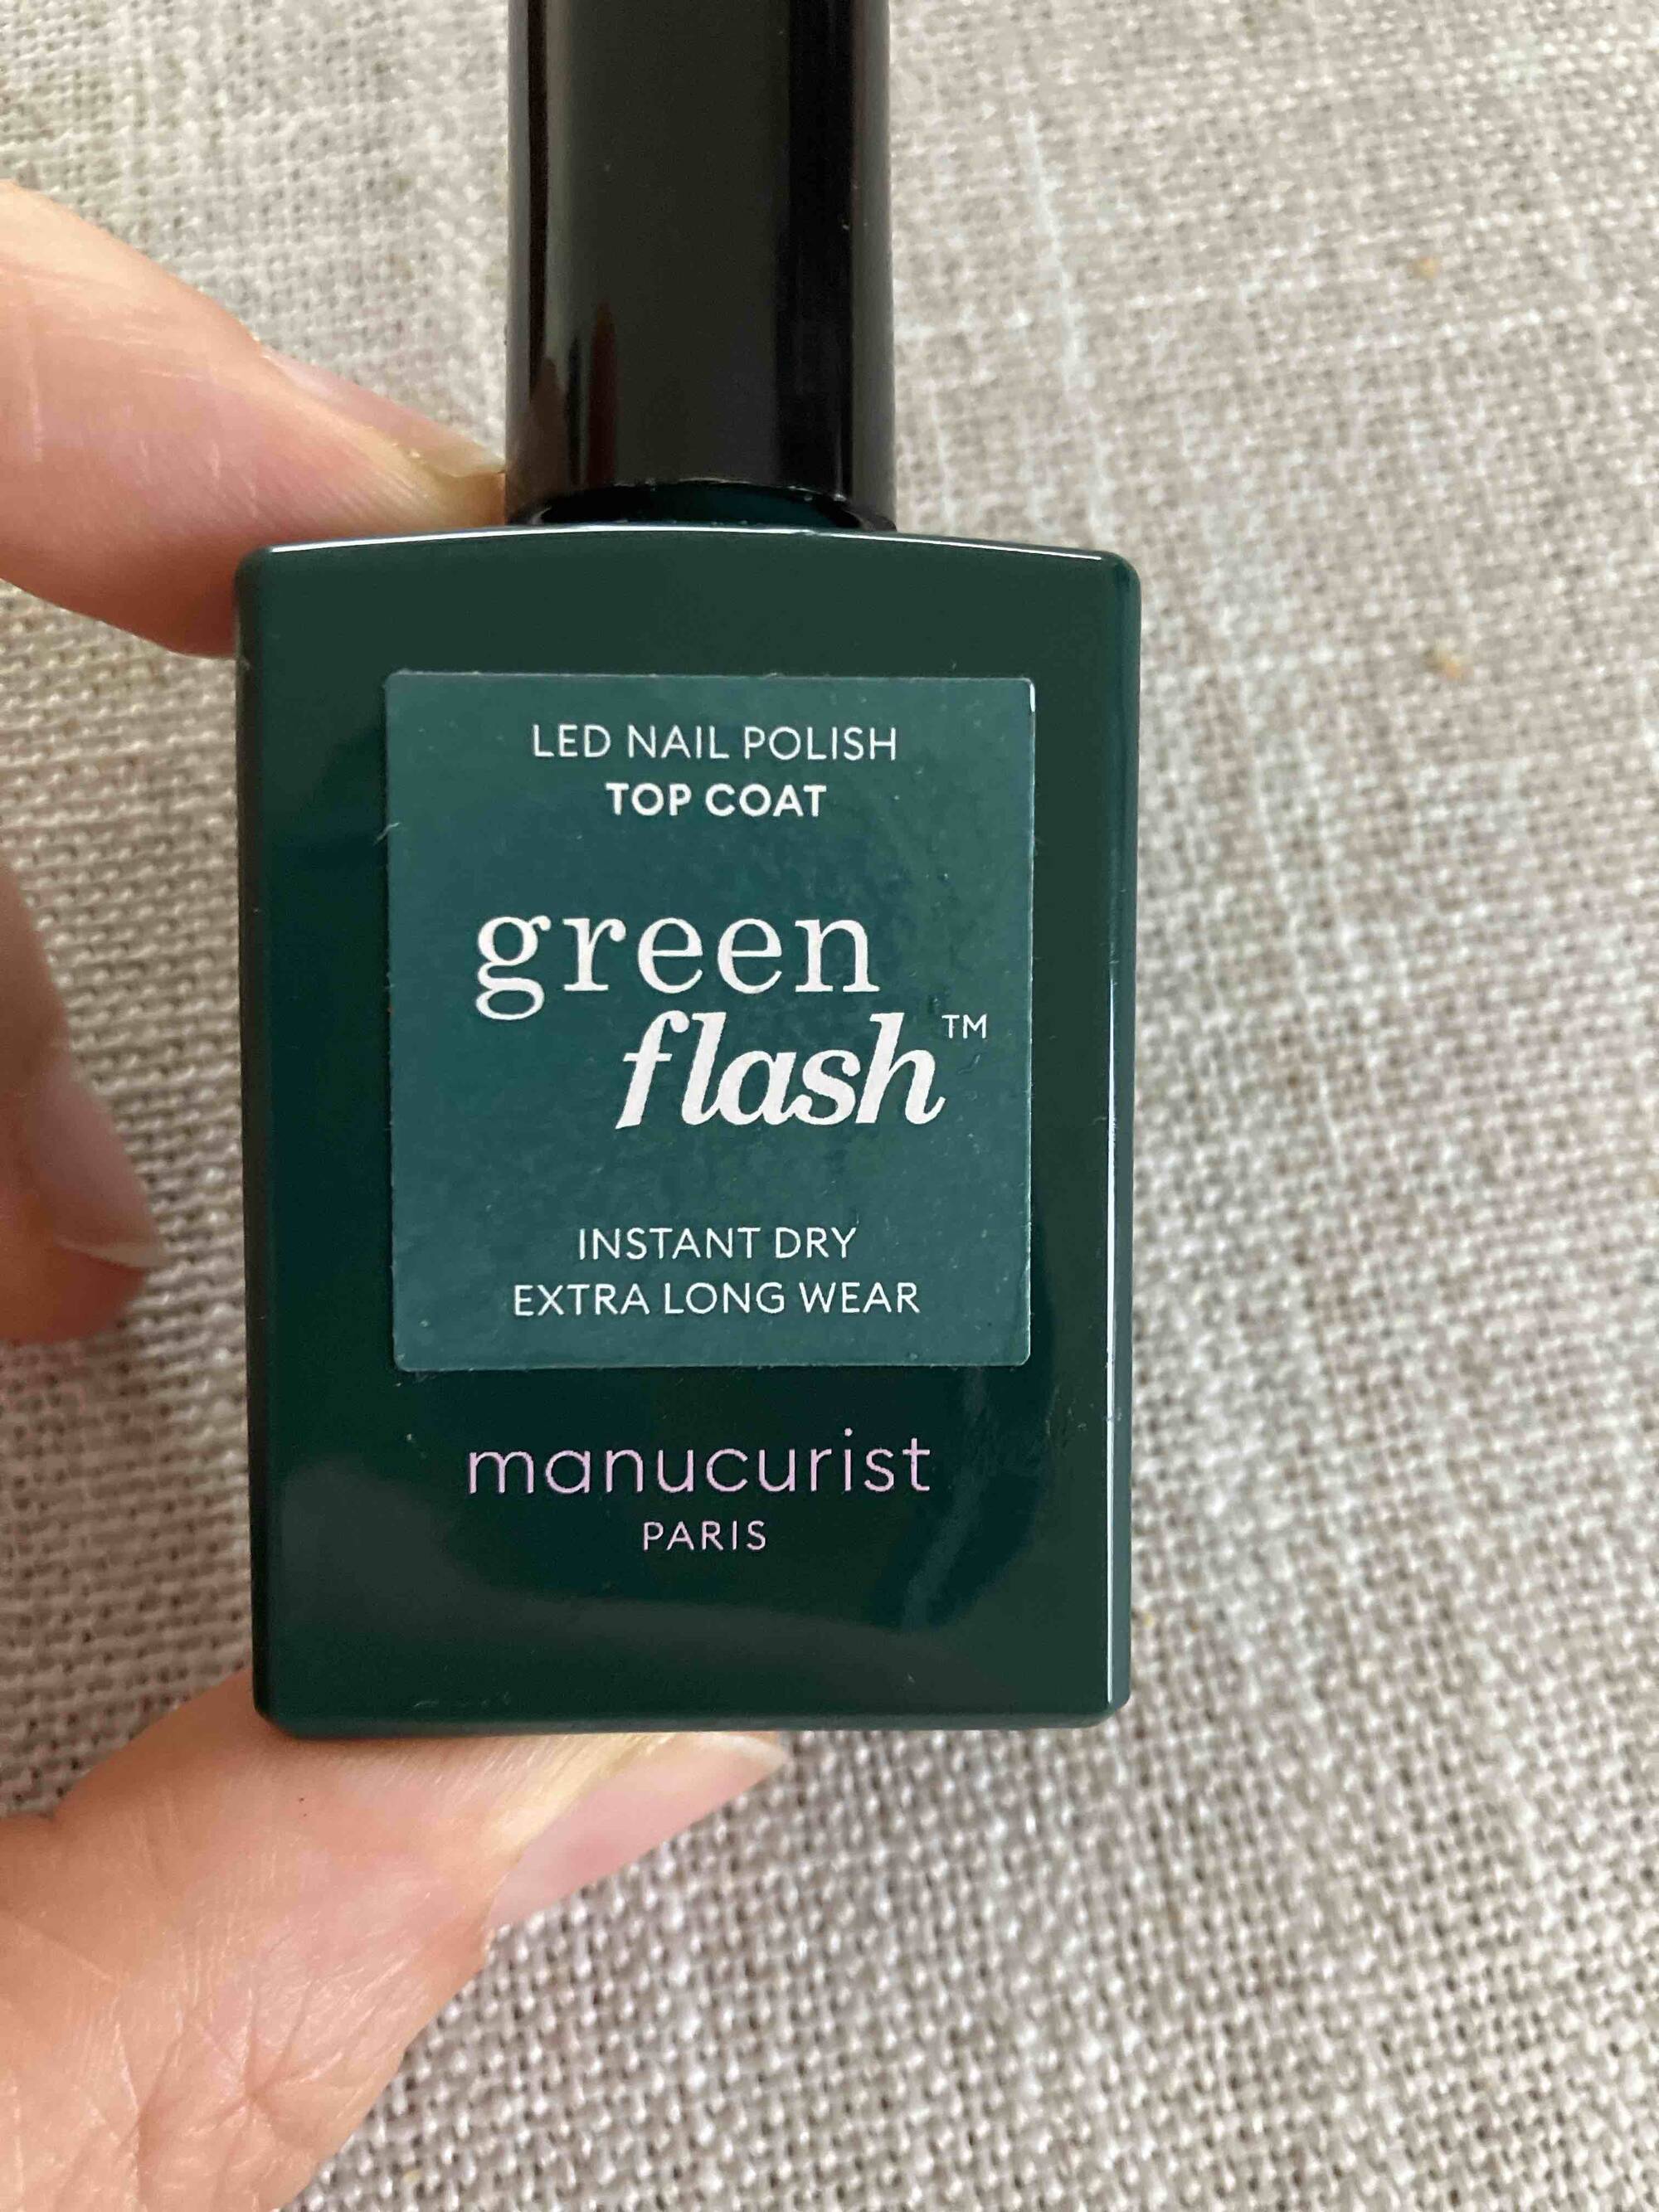 MANUCURIST - Green flash - Led nail polish top coat